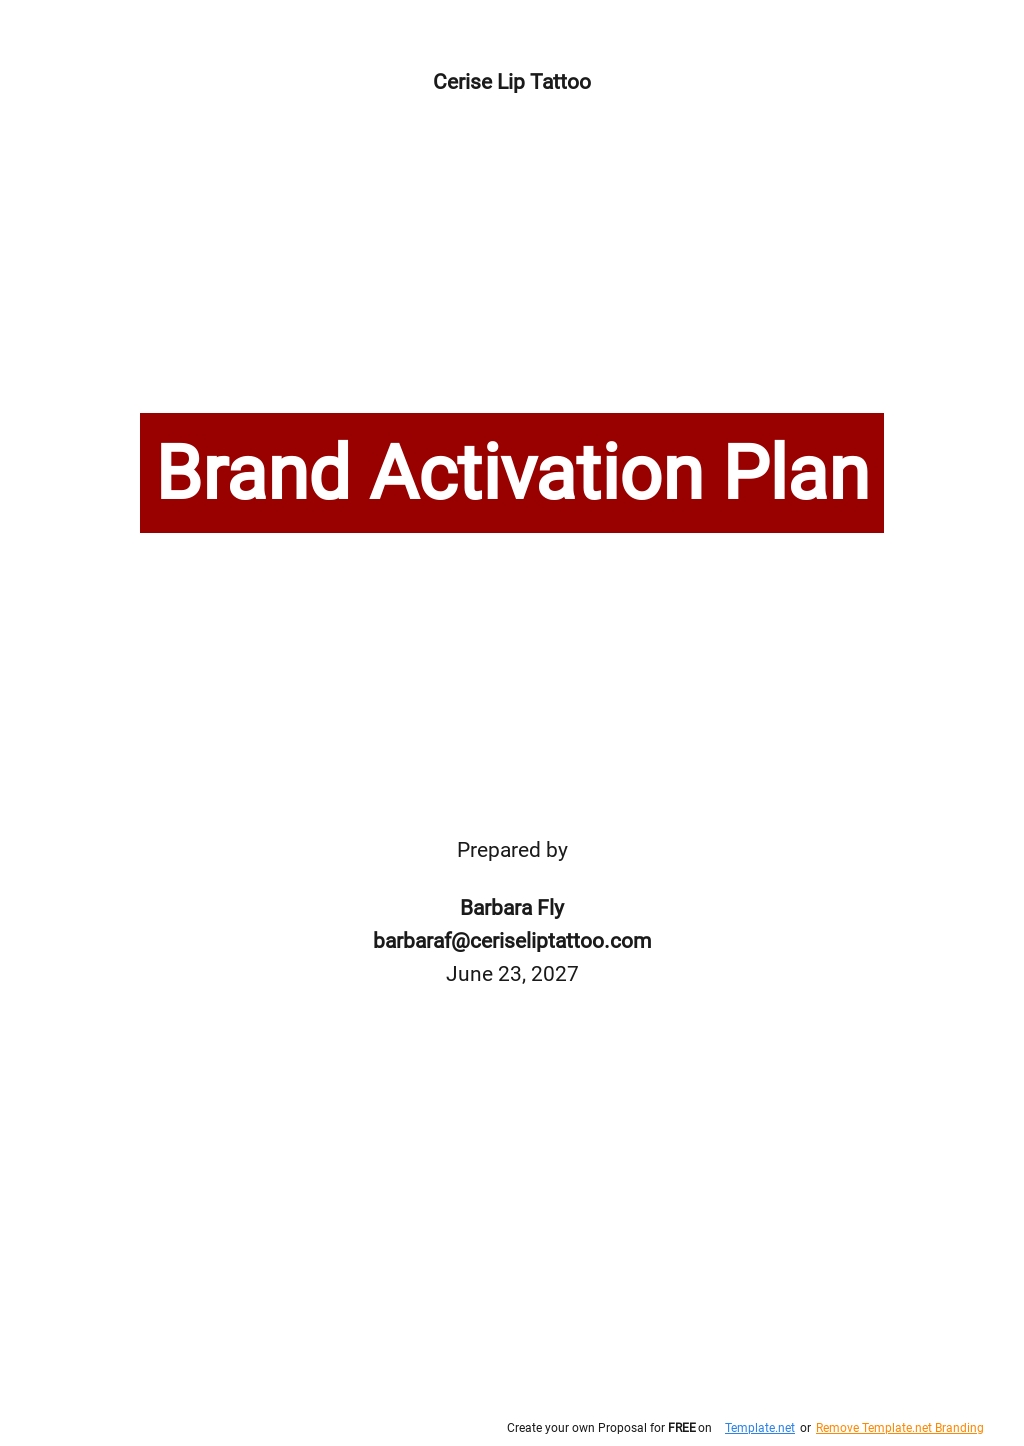 Sample Brand Activation Plan Template.jpe